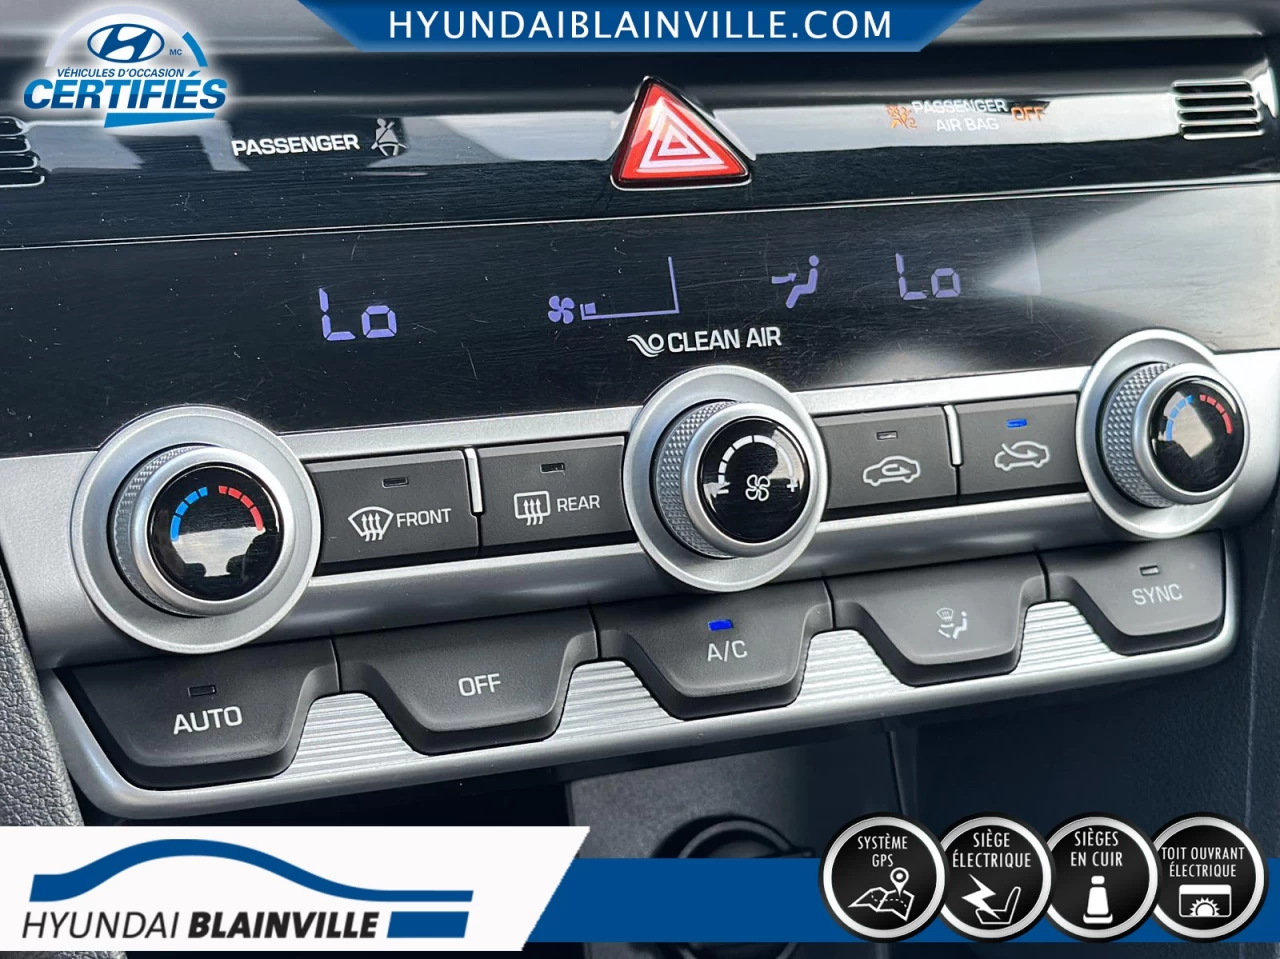 2020 Hyundai Elantra ULTIMATE, CUIR. TOIT OUVRANT, GPS+ Main Image